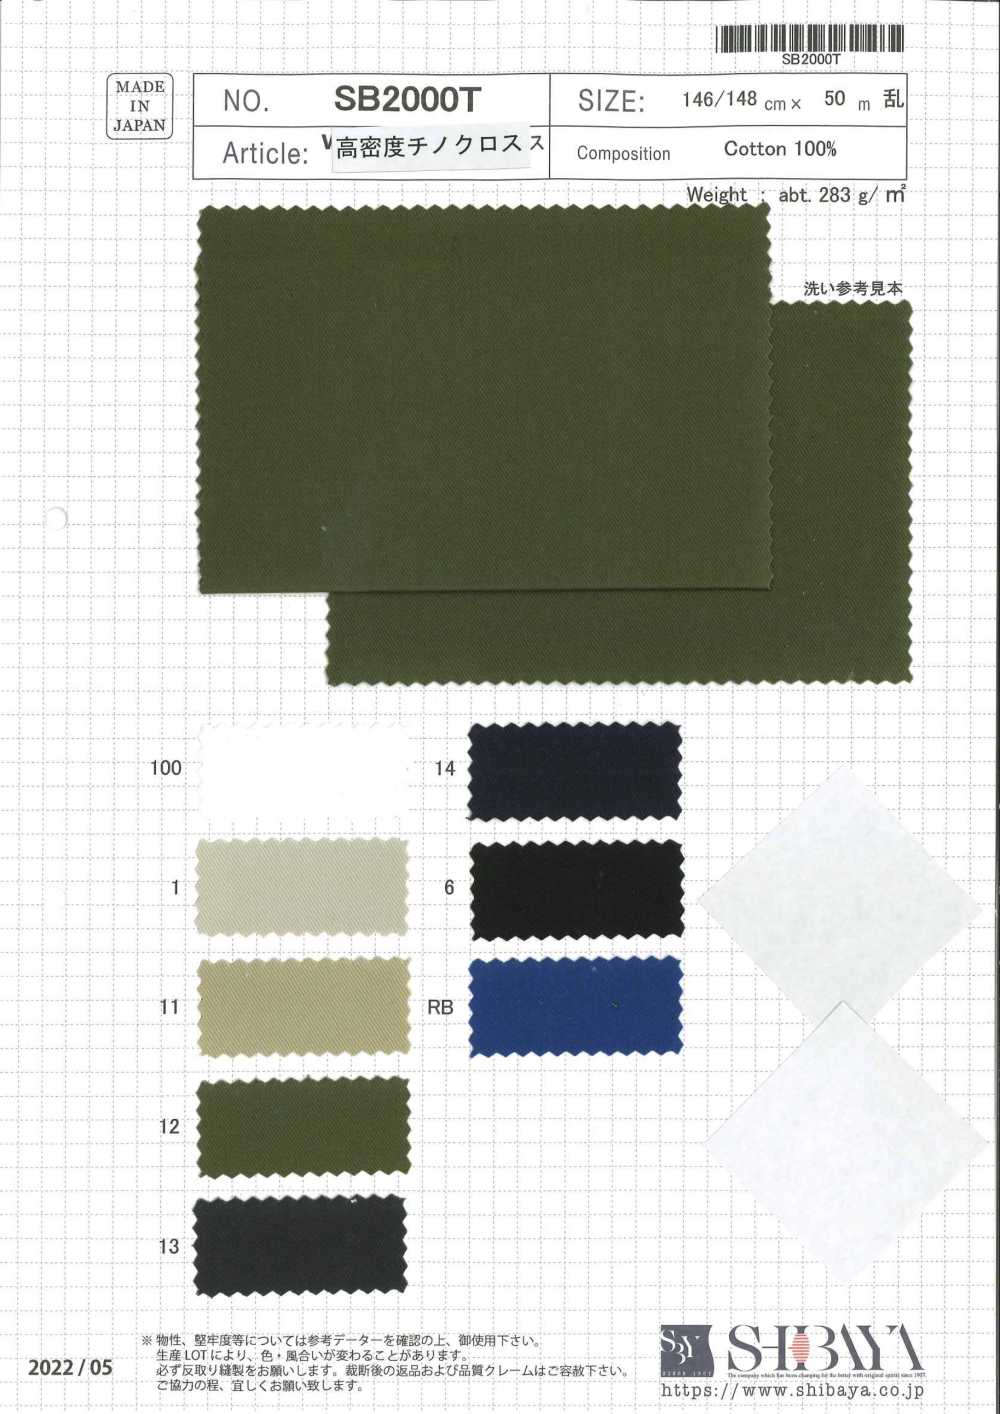 SB2000T High Density Chino Cloth[Textile / Fabric] SHIBAYA